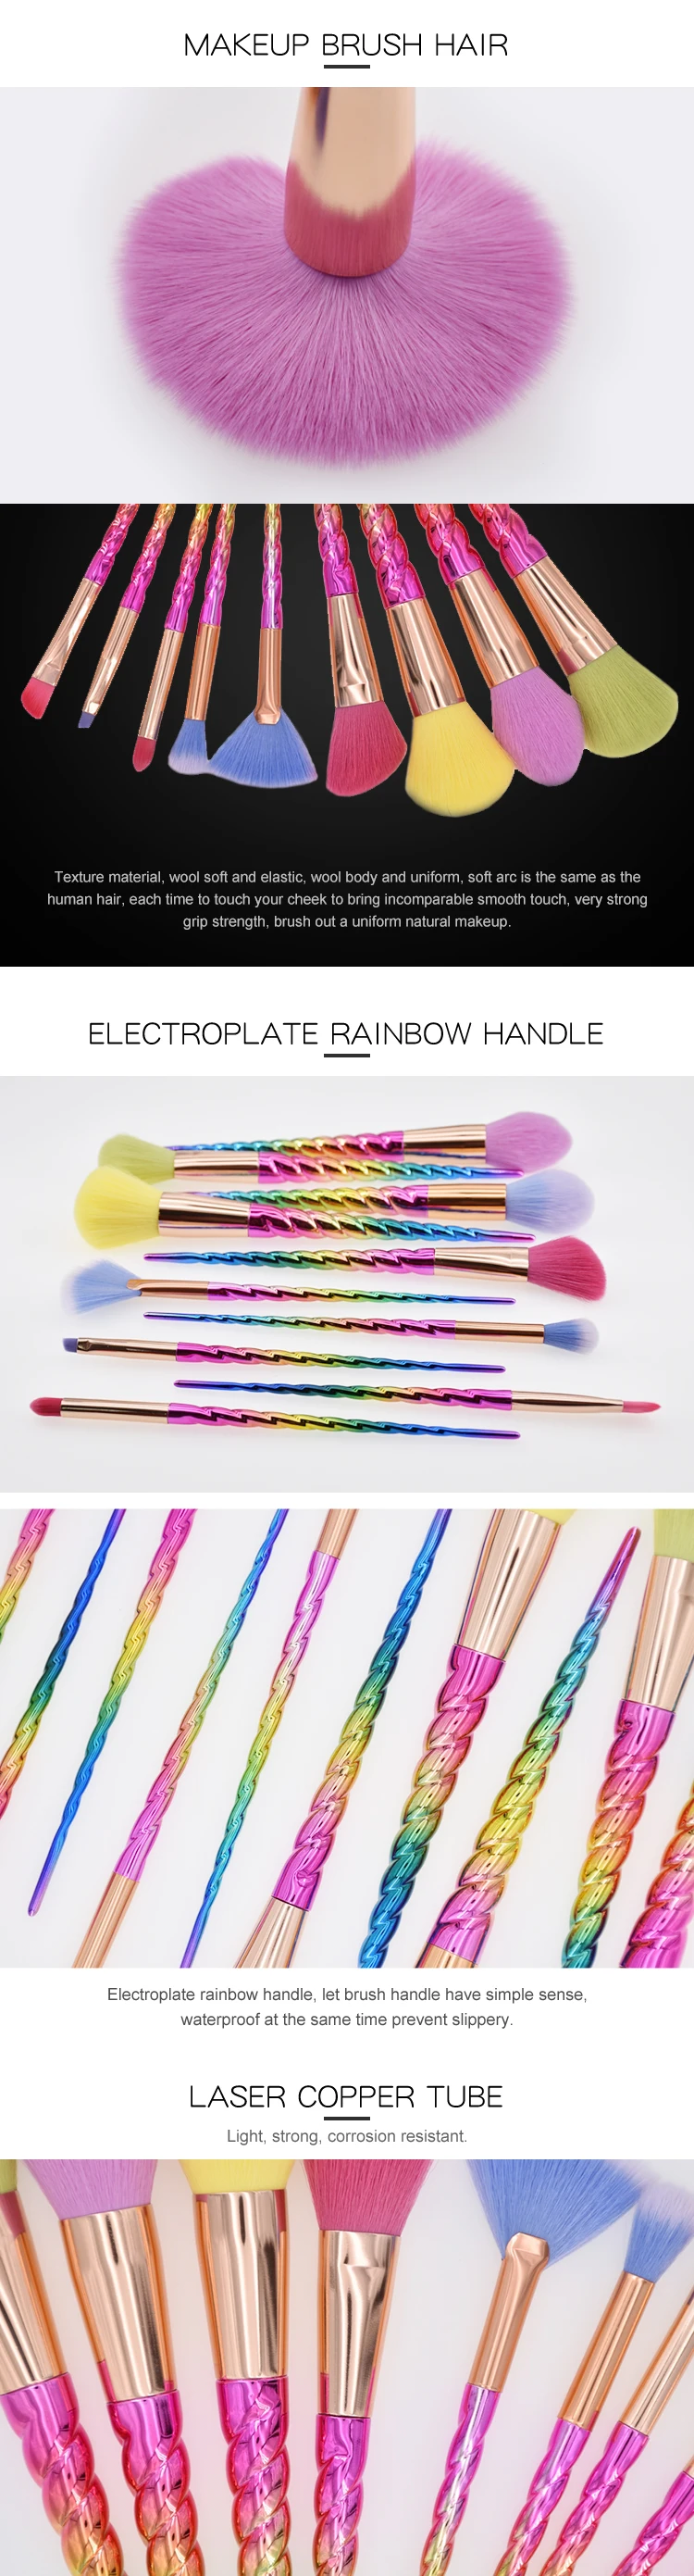 Amazon Premium Private Label Rainbow Makeup Brushes Set - Buy Rainbow ...